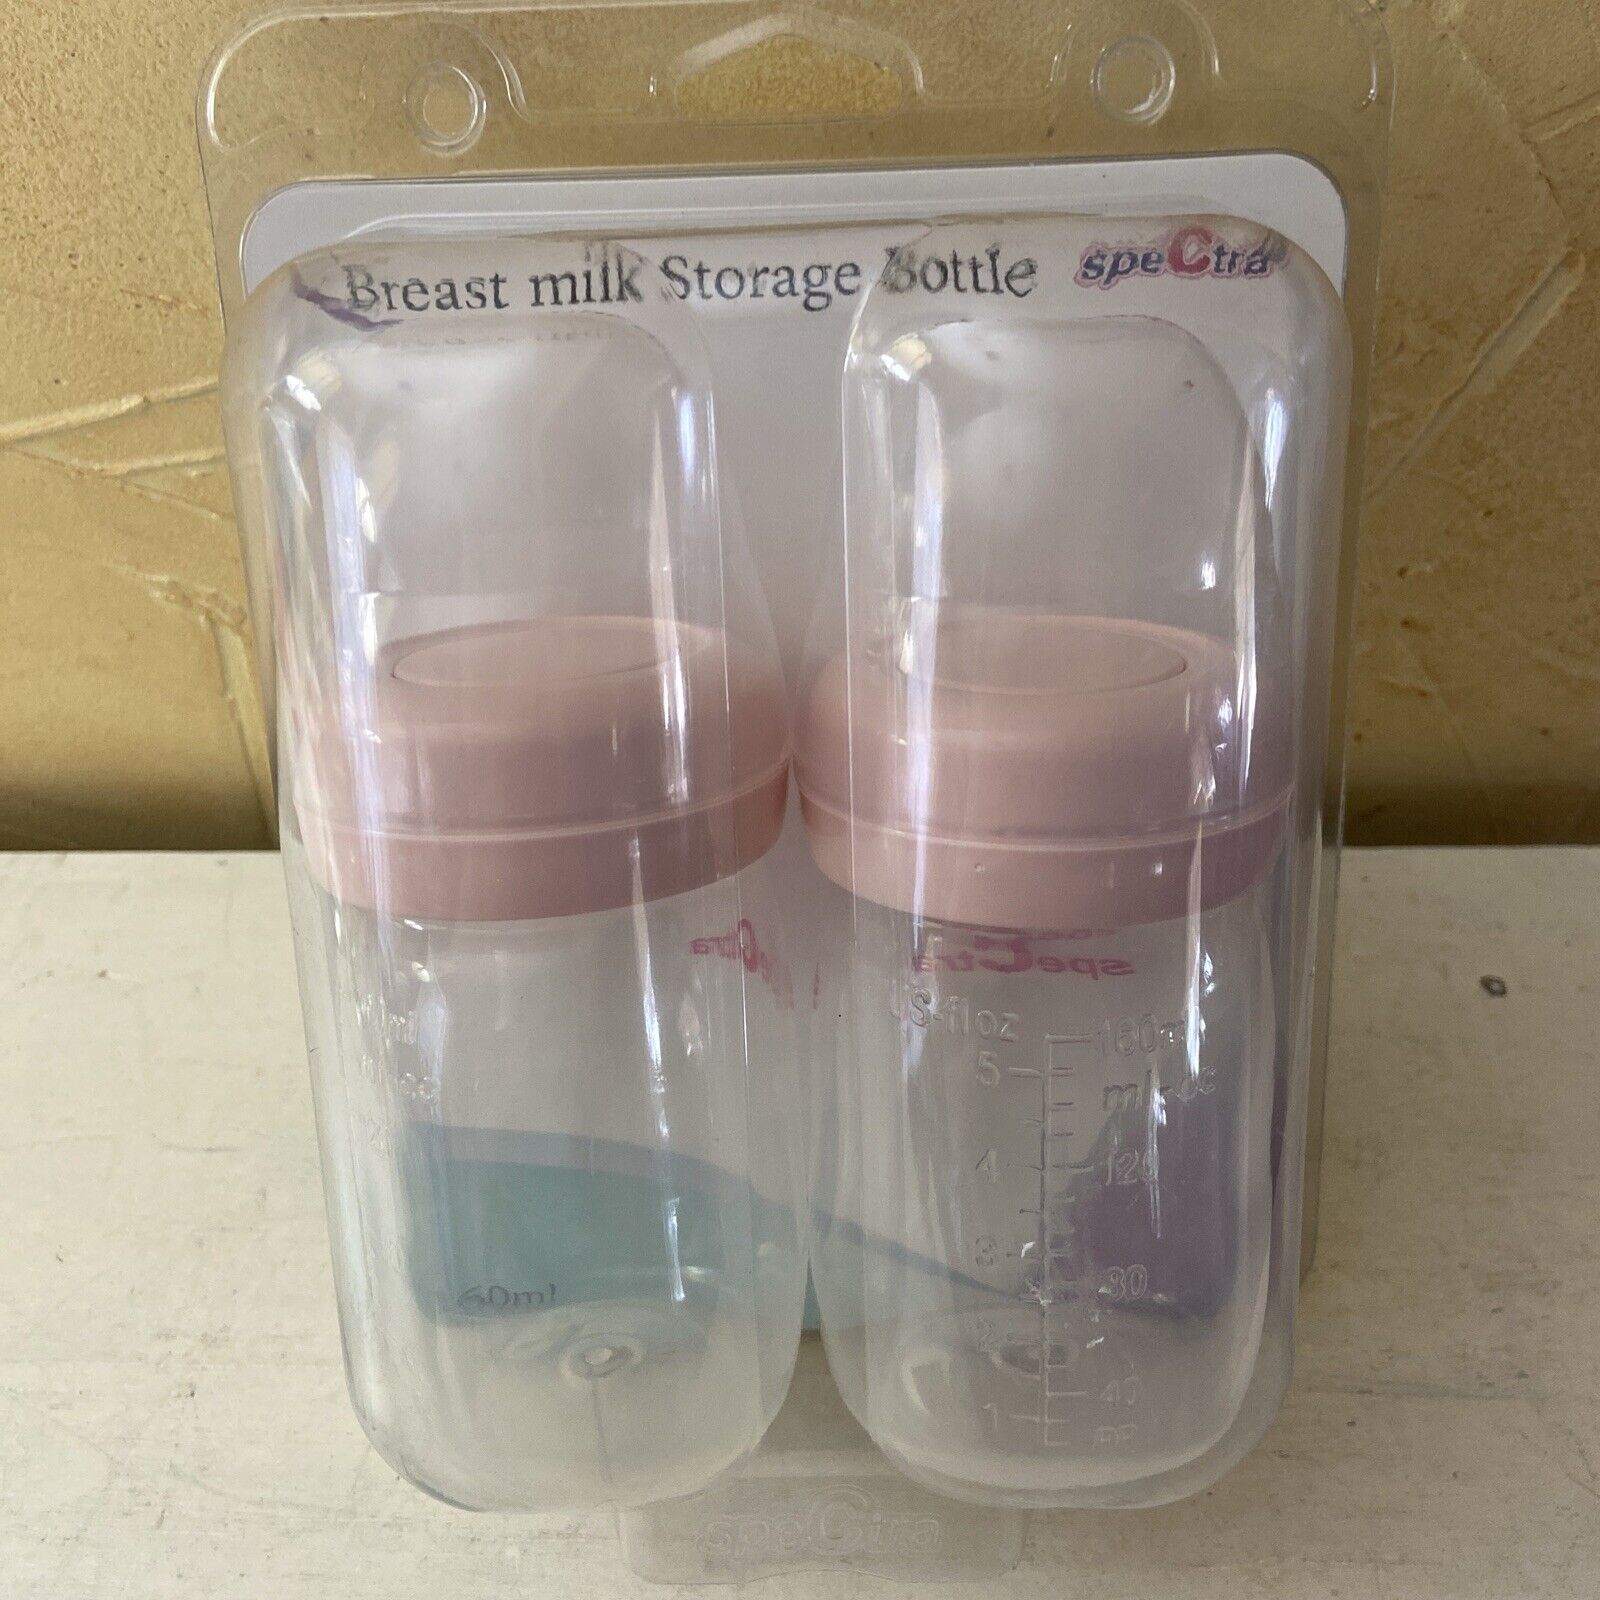 New Sealed Spectra Breast Milk Storage Bottles - 160ml Or 5+ Ounces 2 Bottles